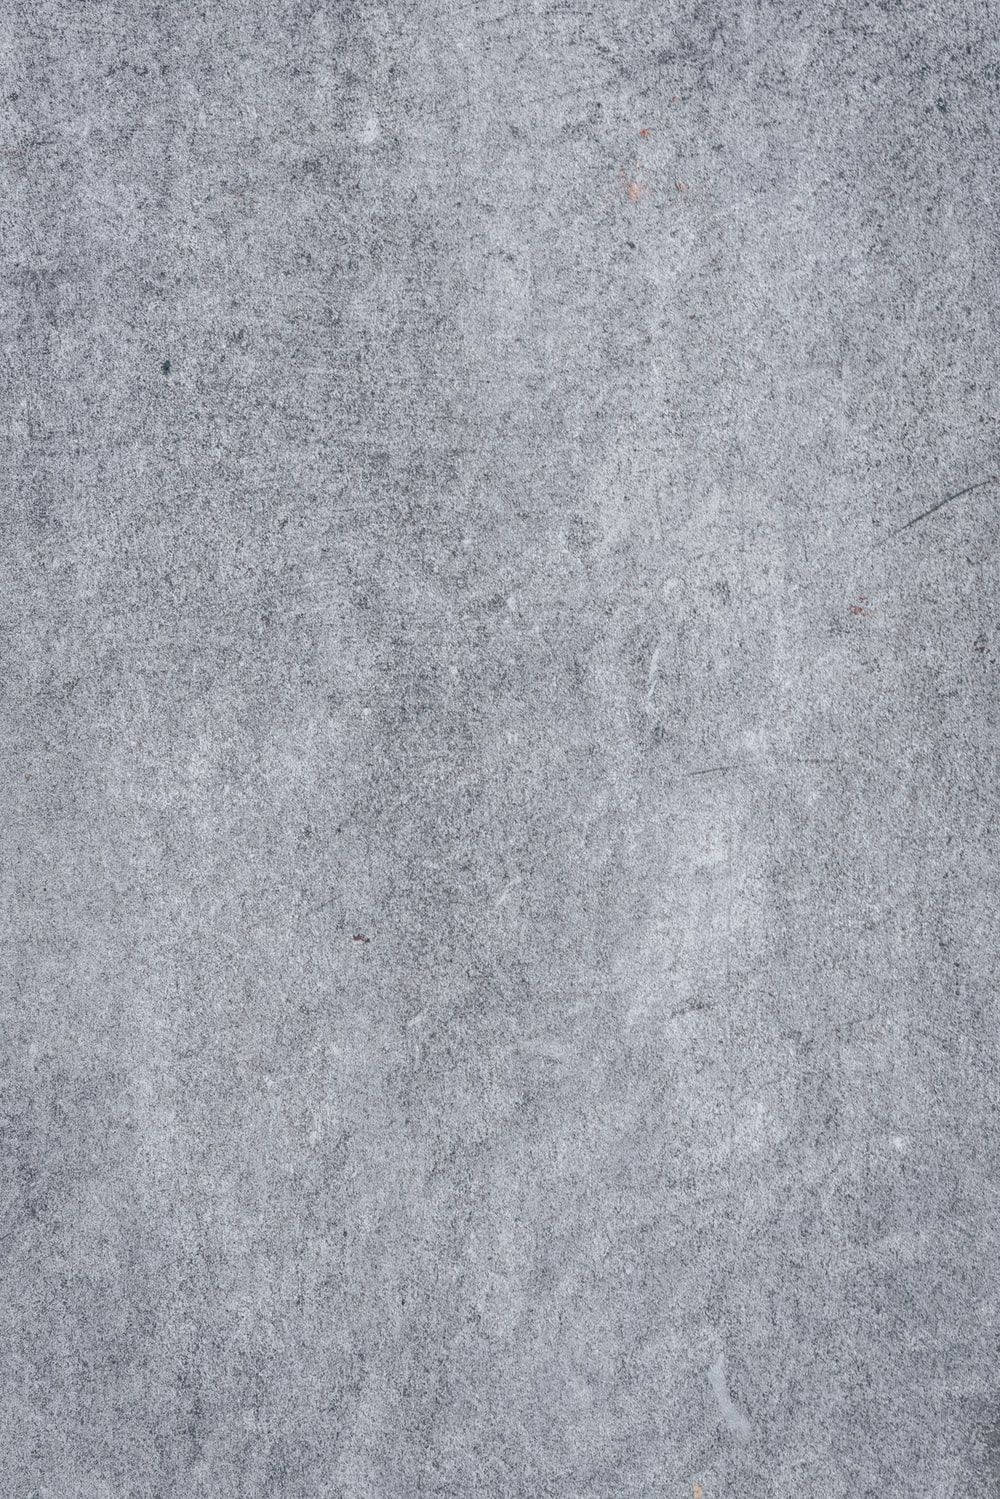 Light Gray Stone Texture Background